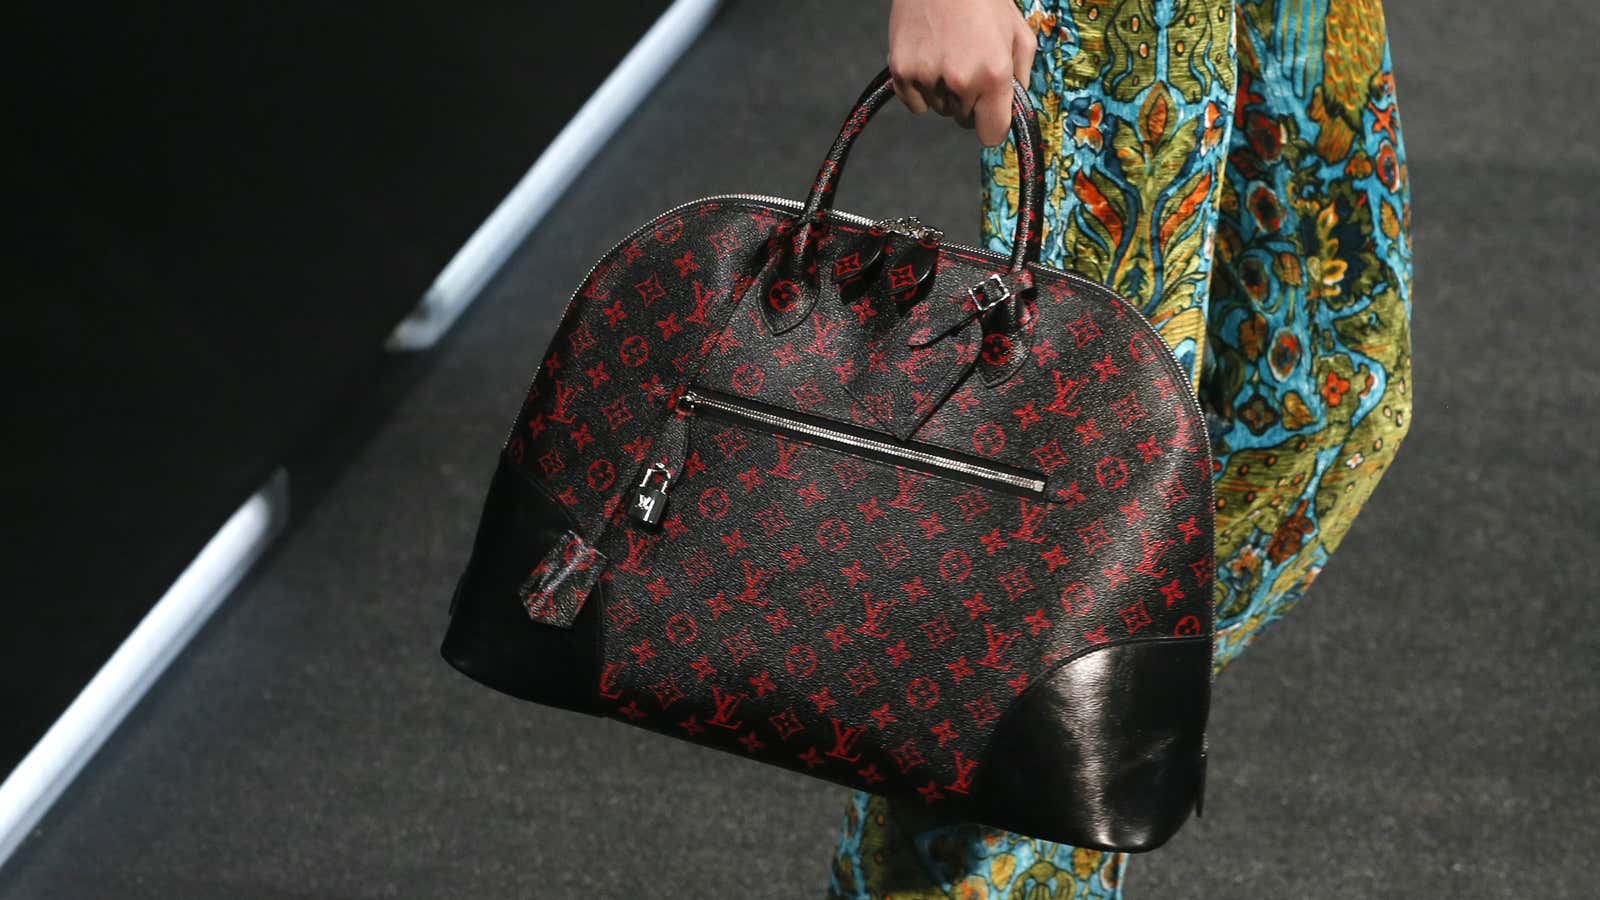 Is Louis Vuitton cruelty-free? - Quora